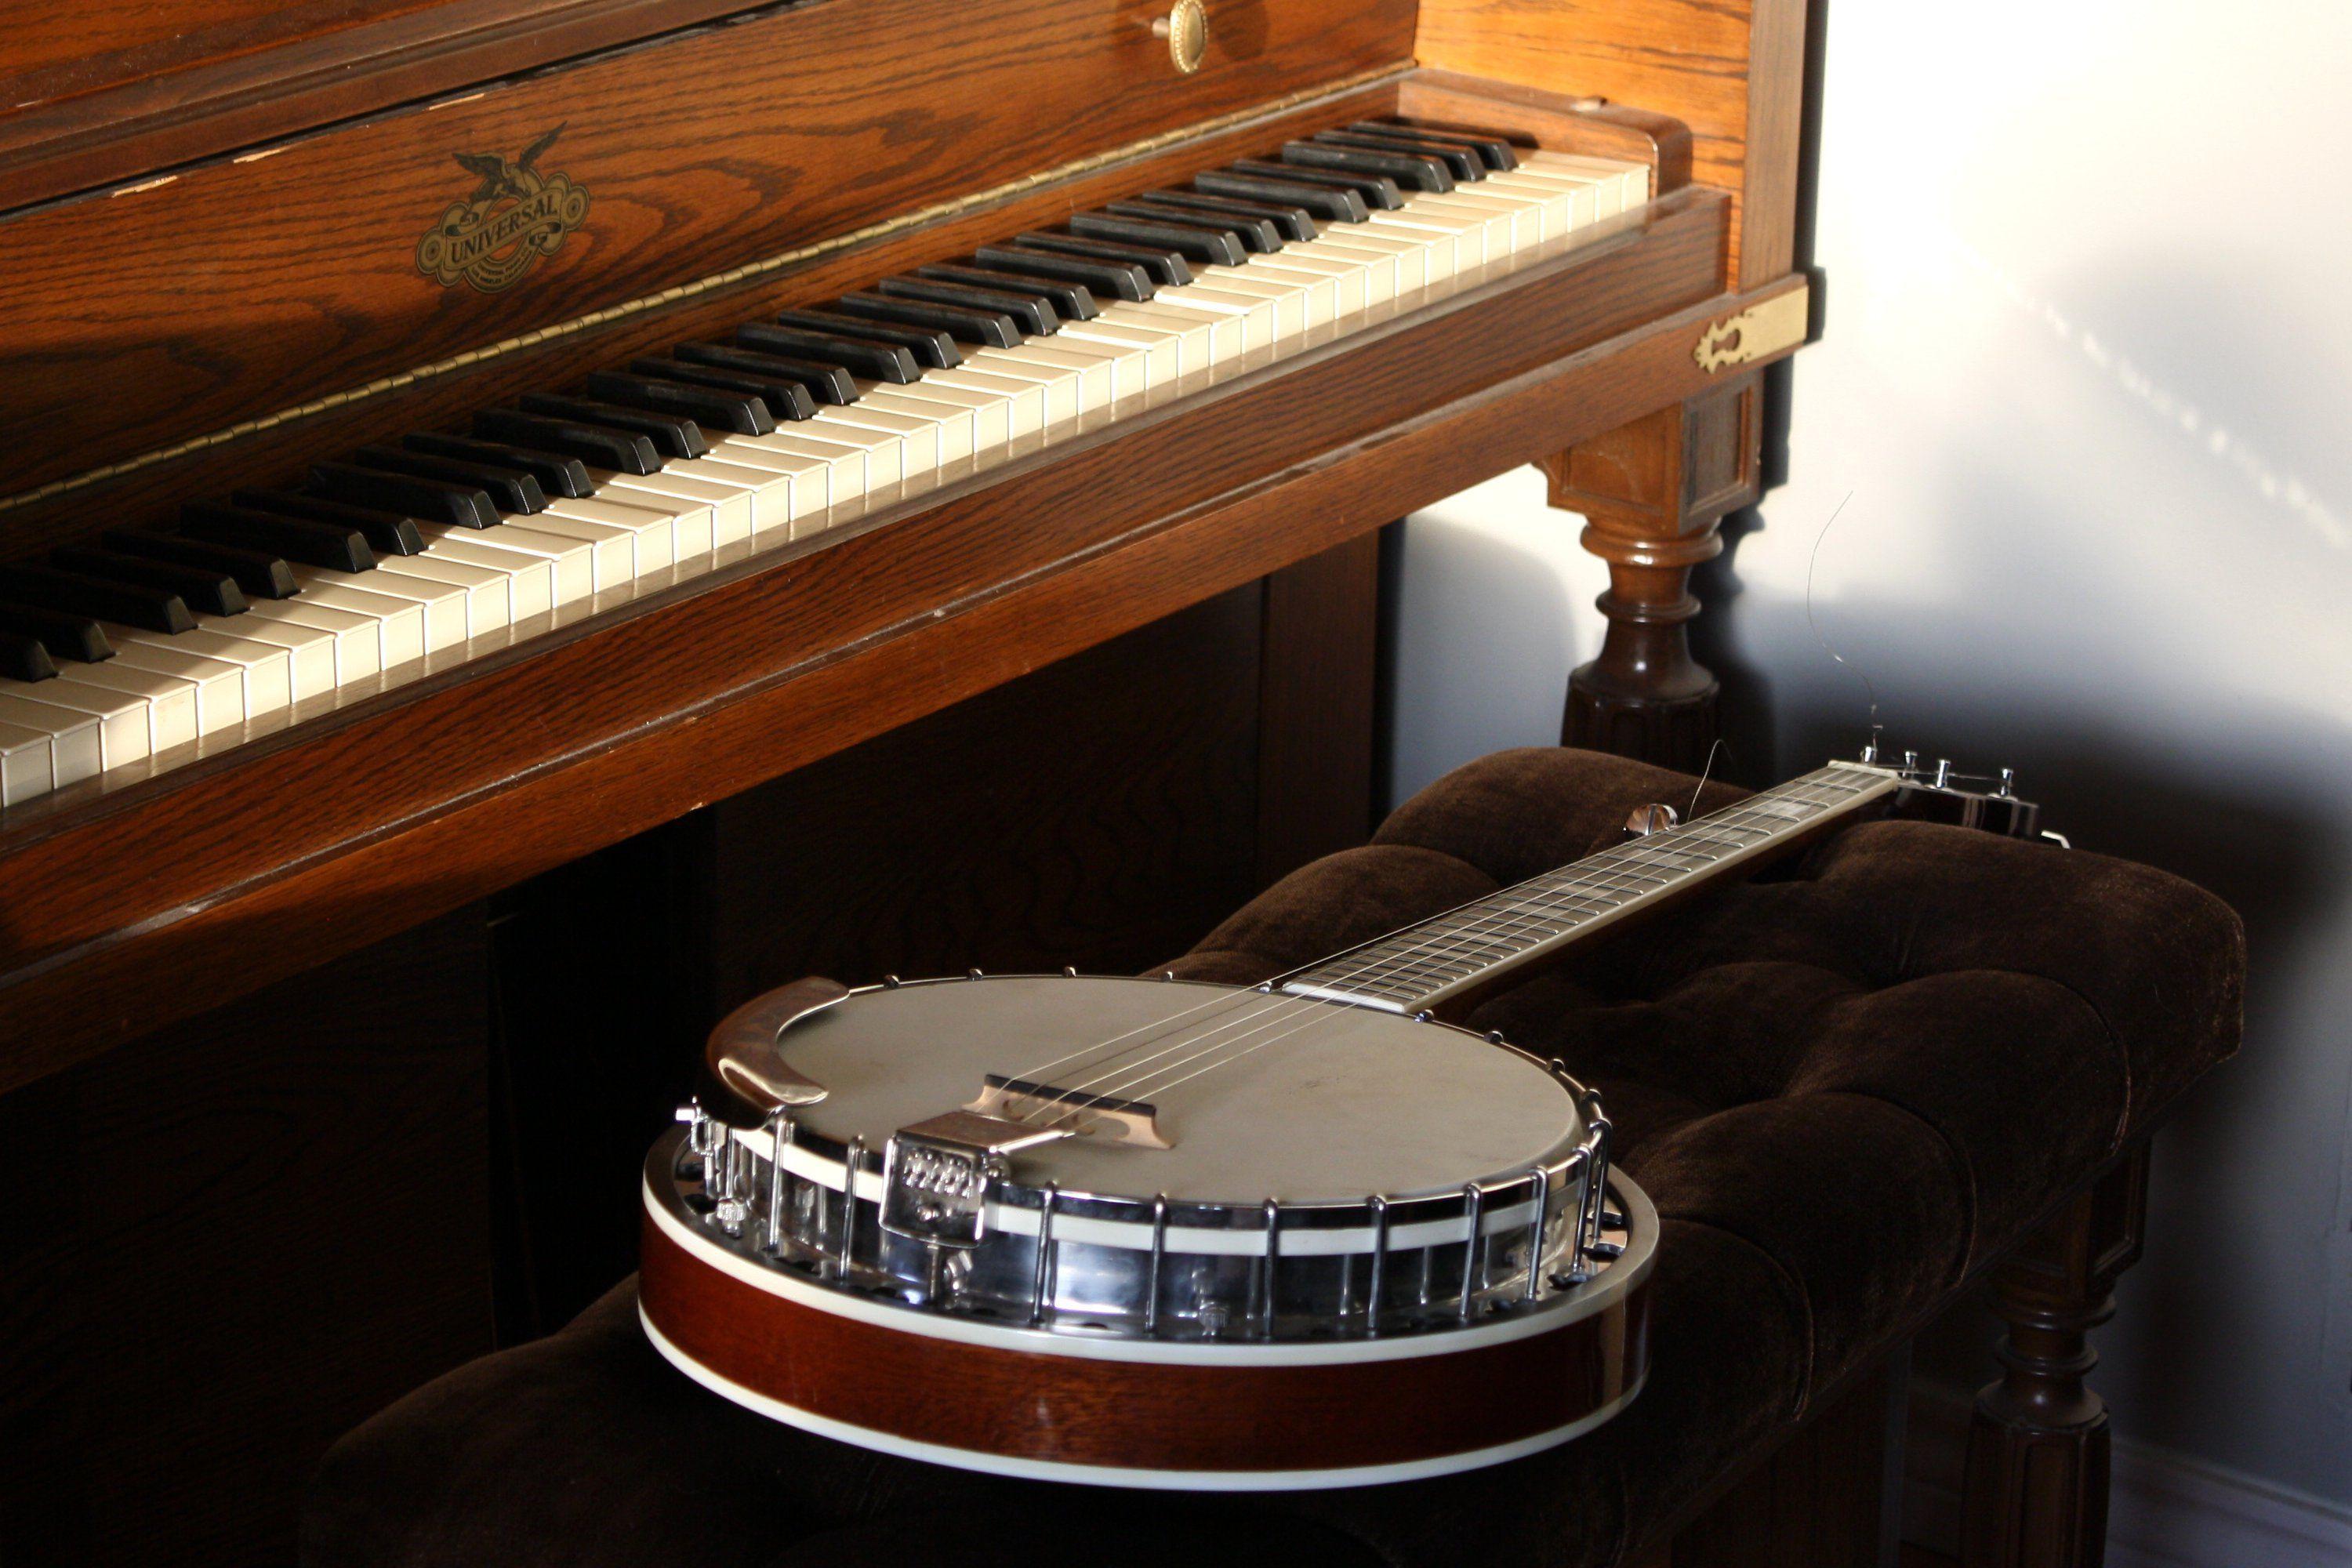 Piano and Banjo Picture. Free Photograph. Photo Public Domain